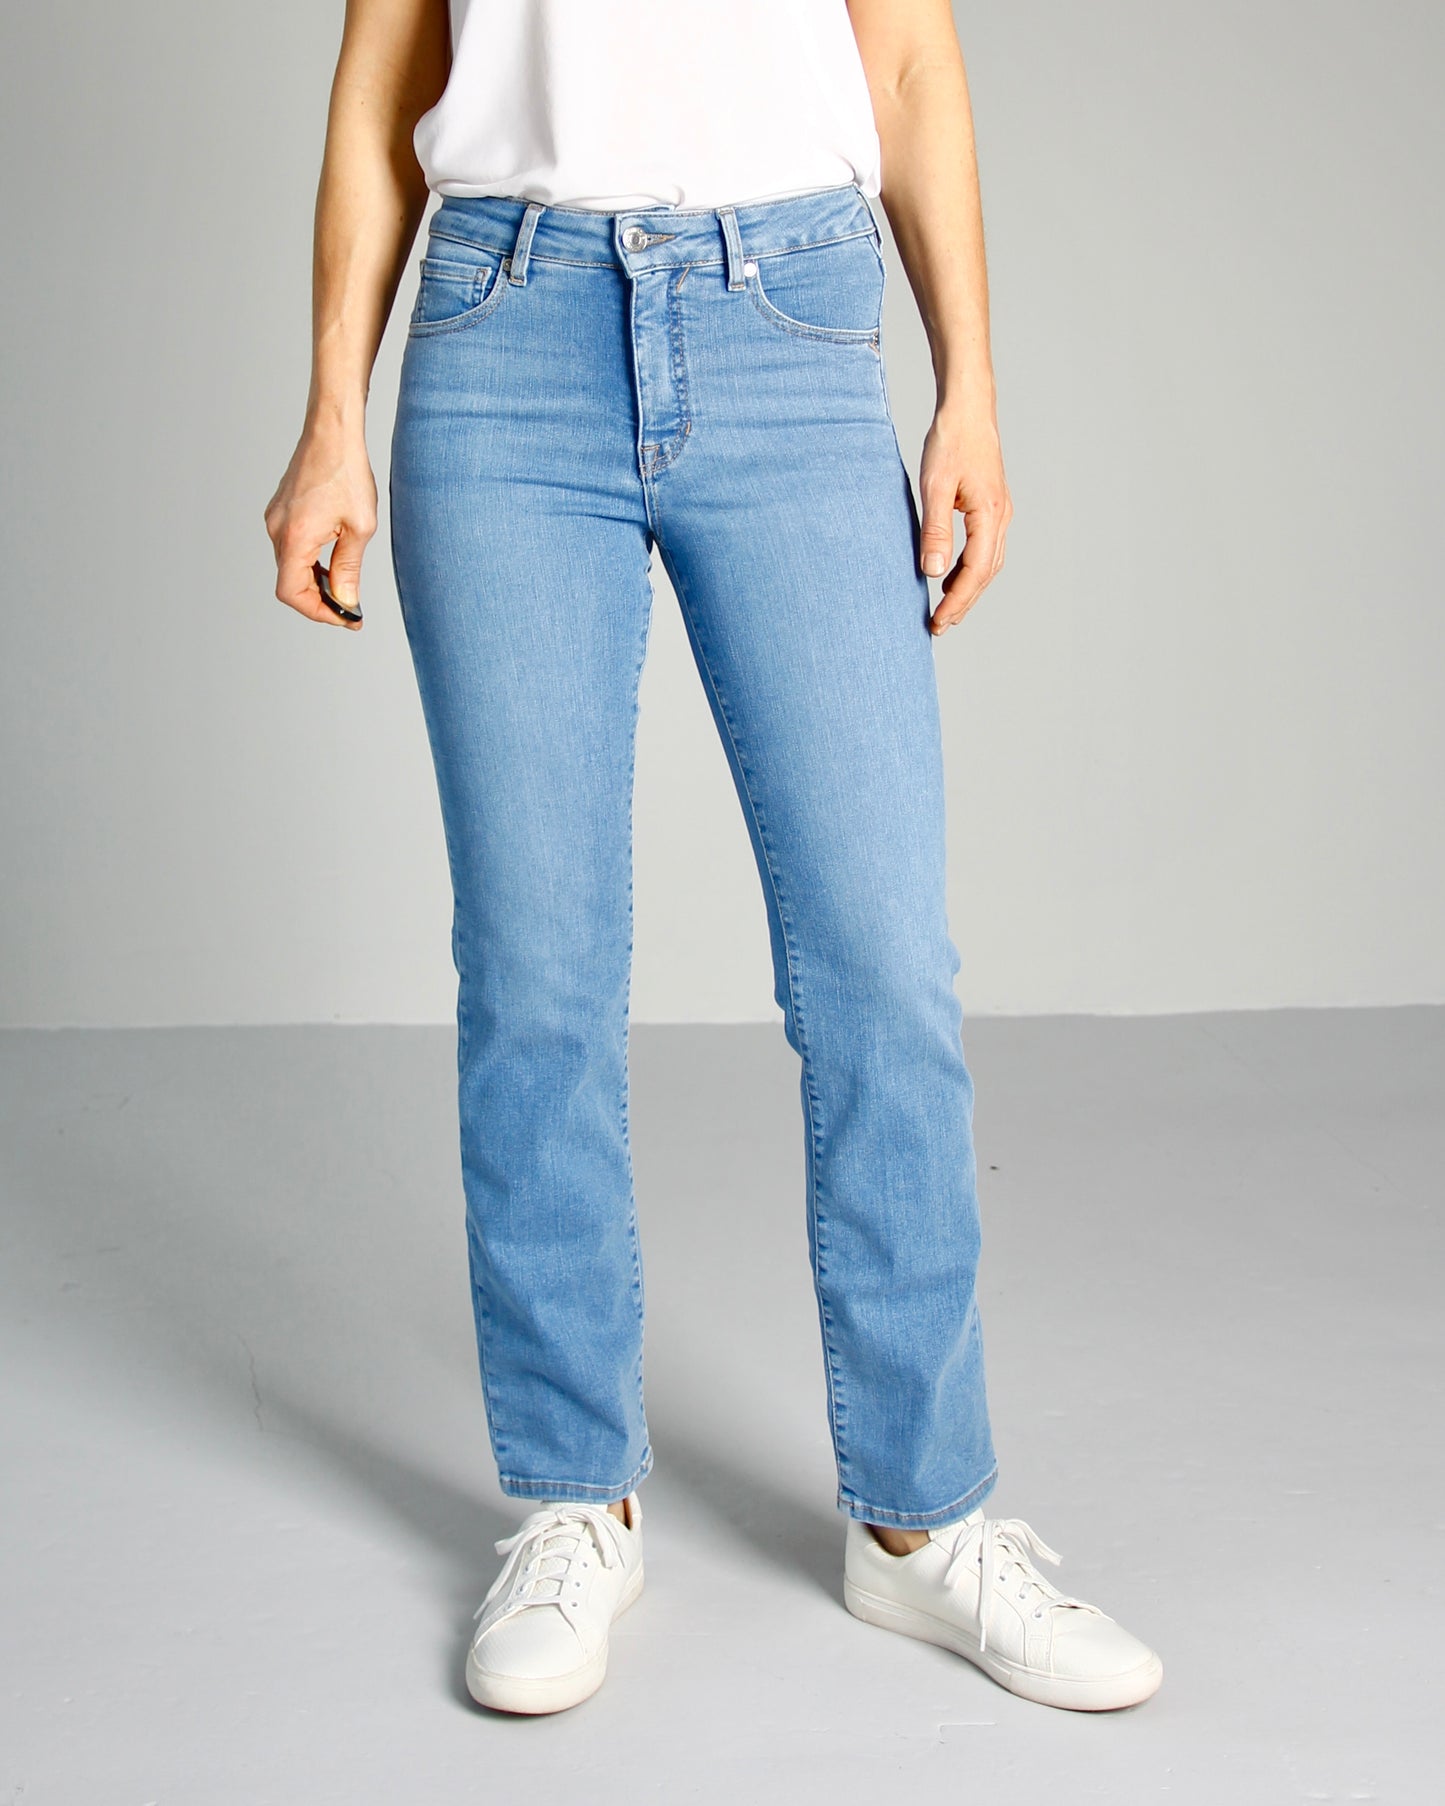 NY - Vera Riviera blue Jeans - Dame - Straight  - High waist - Stretchy